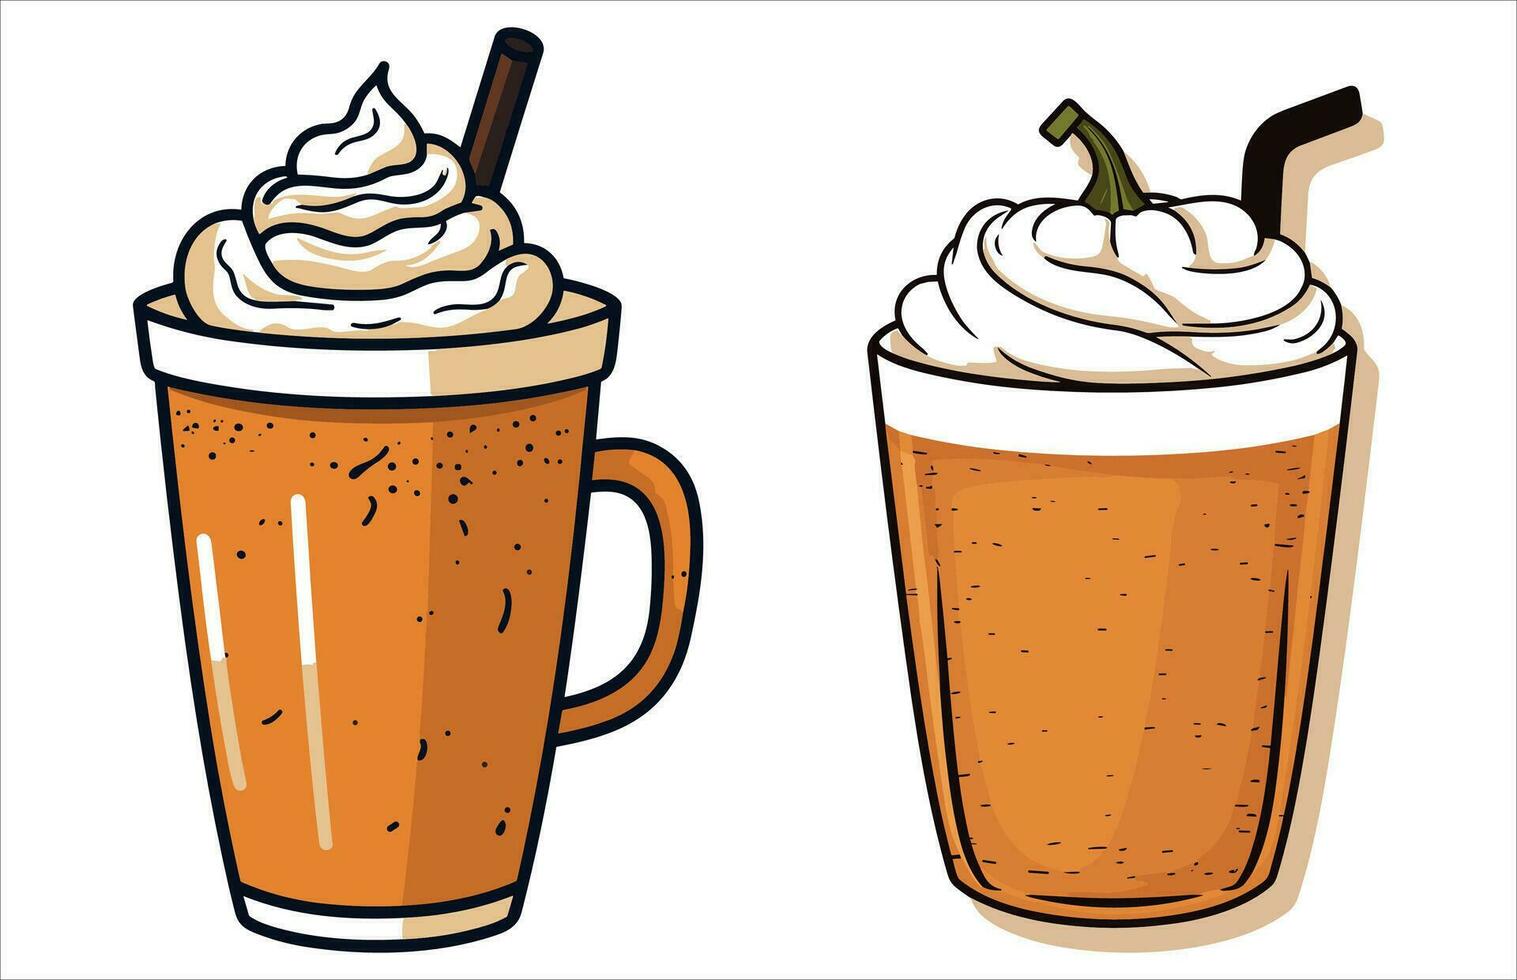 calabaza especia latté café vector, otoño latté café ilustración, otoño café vector